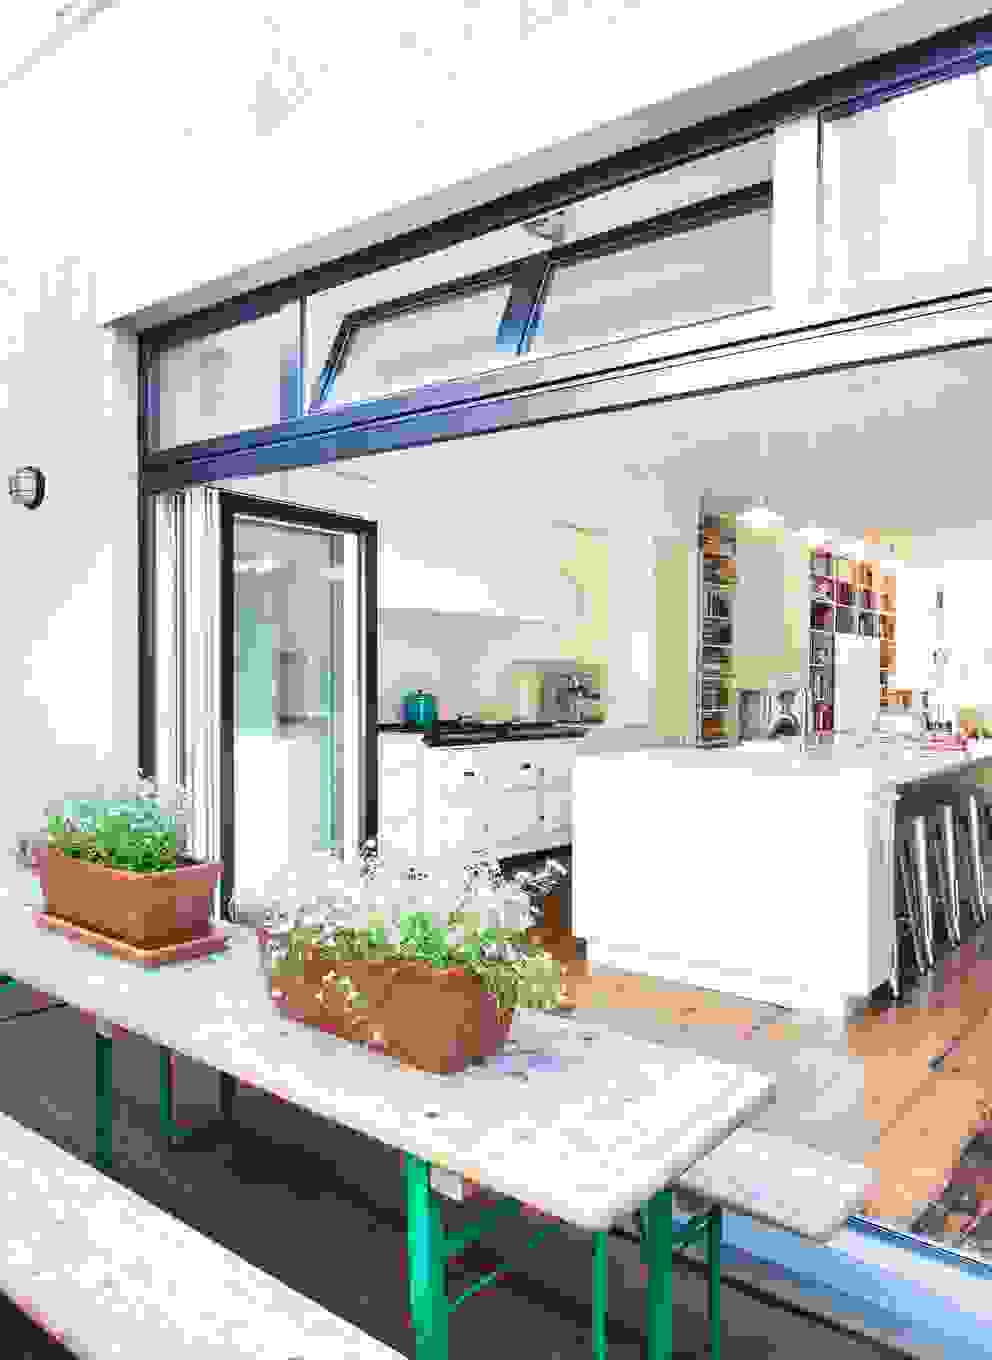 Best Kitchen Space - Professional - Lorraine Bonaventura Remodelista Design Awards Finalist 2017 Please vote for us daily until Aug 4 on Remodelista.com Lorraine Bonaventura Architect آشپزخانه White